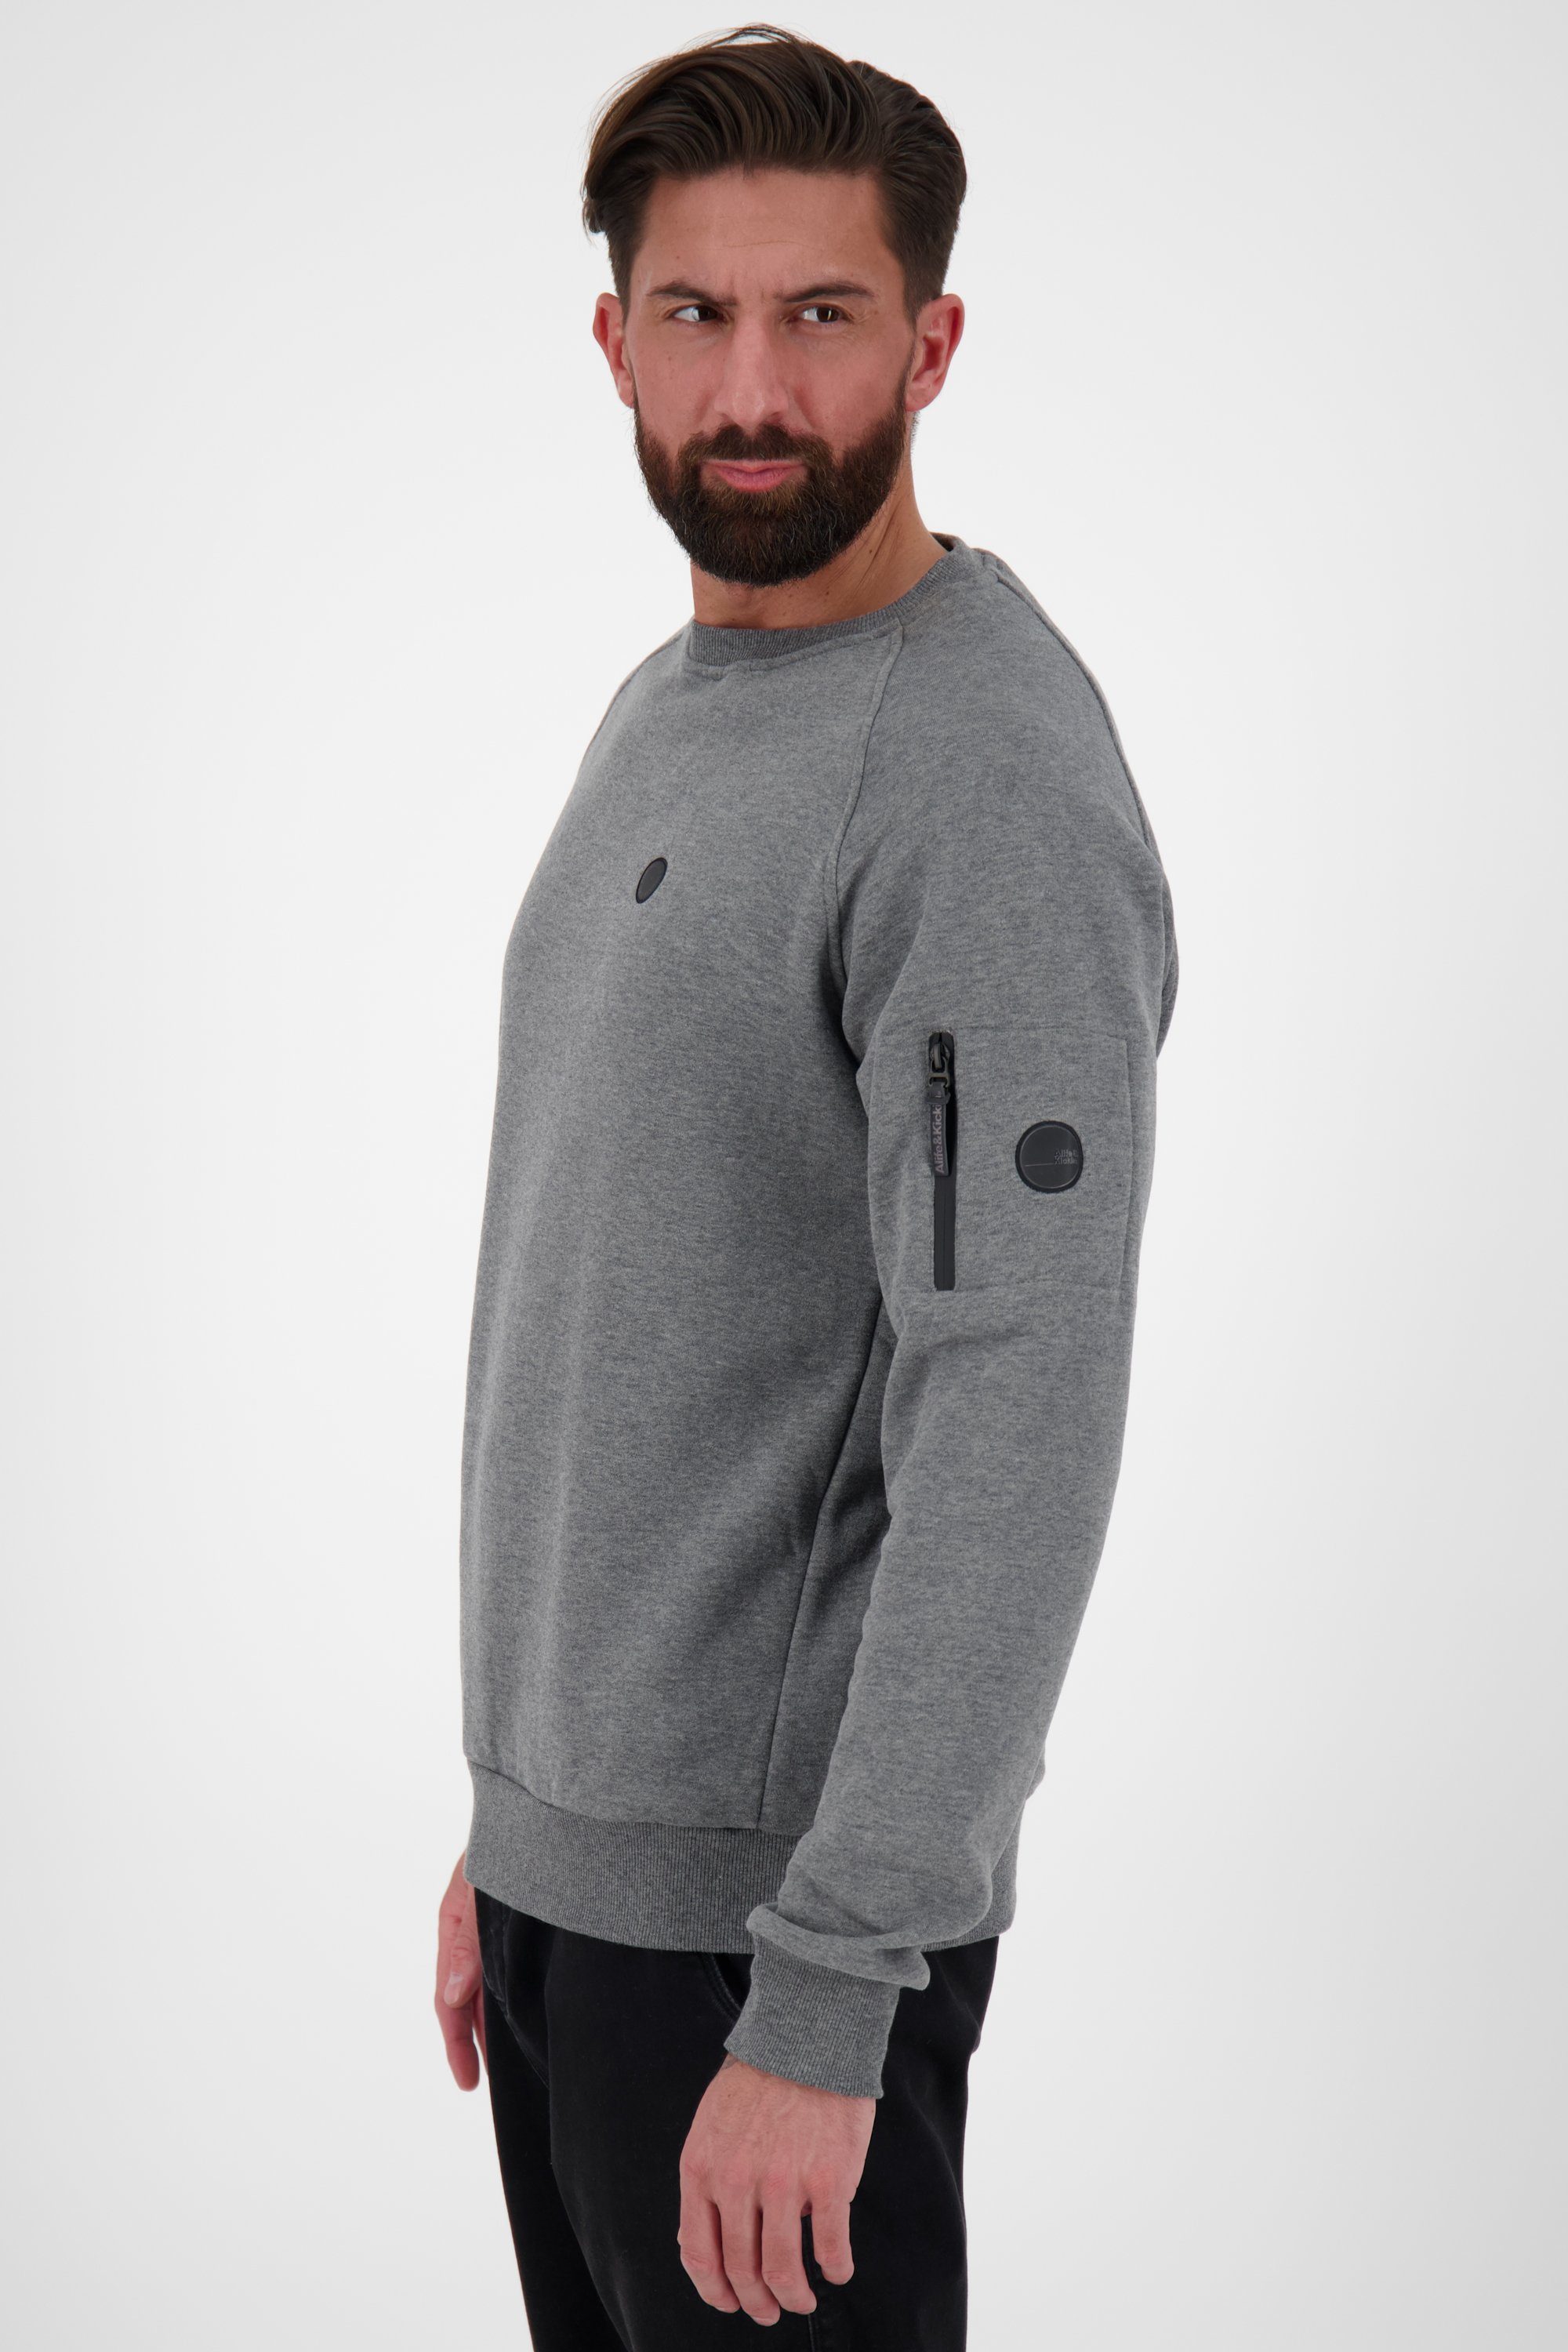 Crewneck & Alife Sweatshirt Sweatshirt, A Kickin Pullover VinnAK Herren steal melange